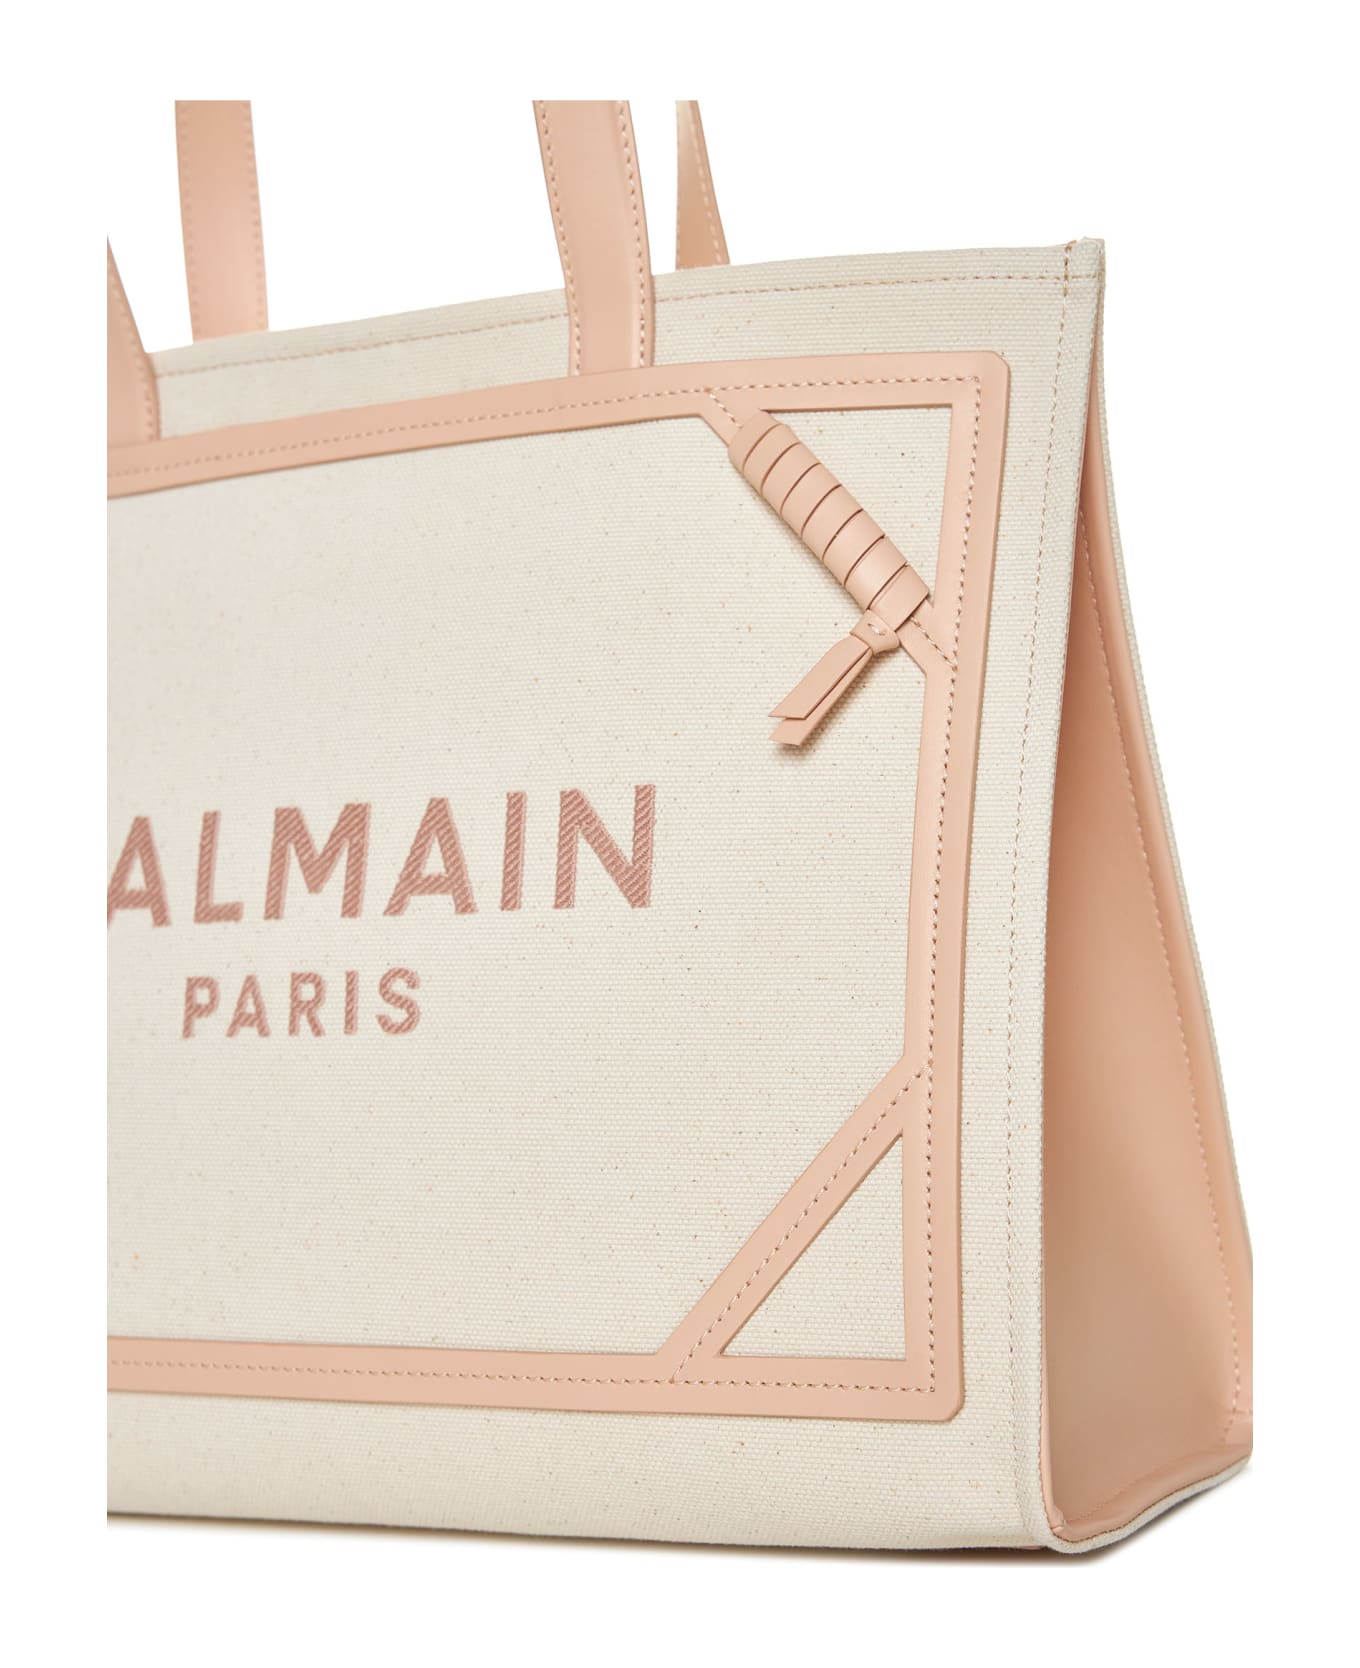 Balmain Shopping Bag - Creme/nude rosè トートバッグ